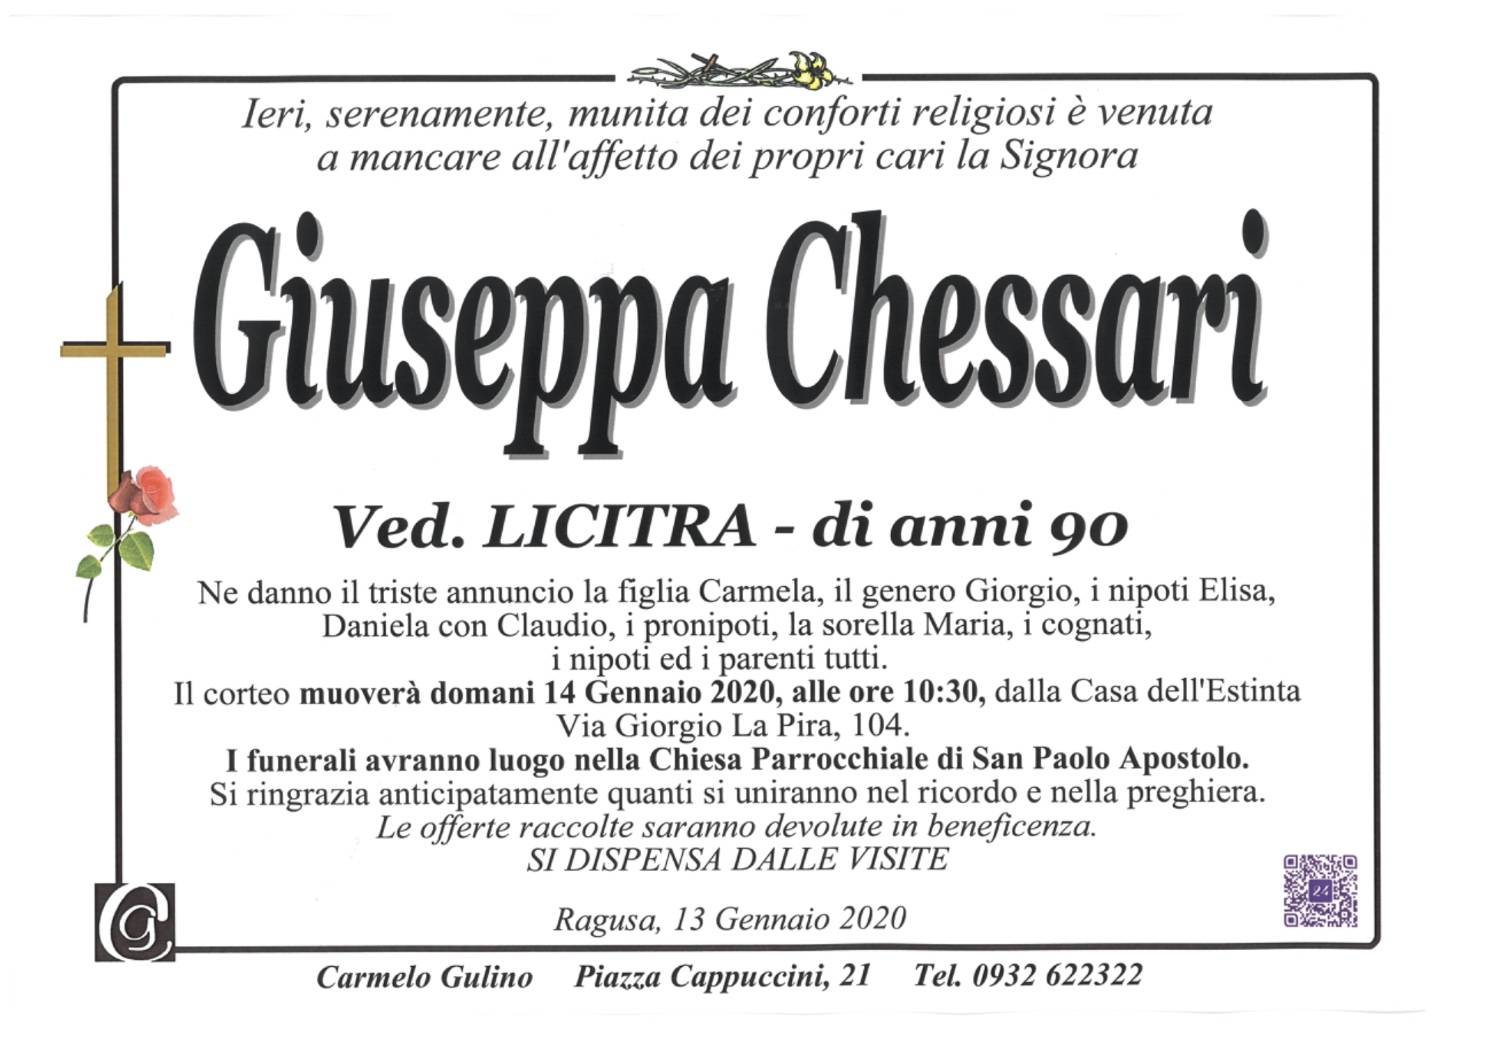 Giuseppa Chessari